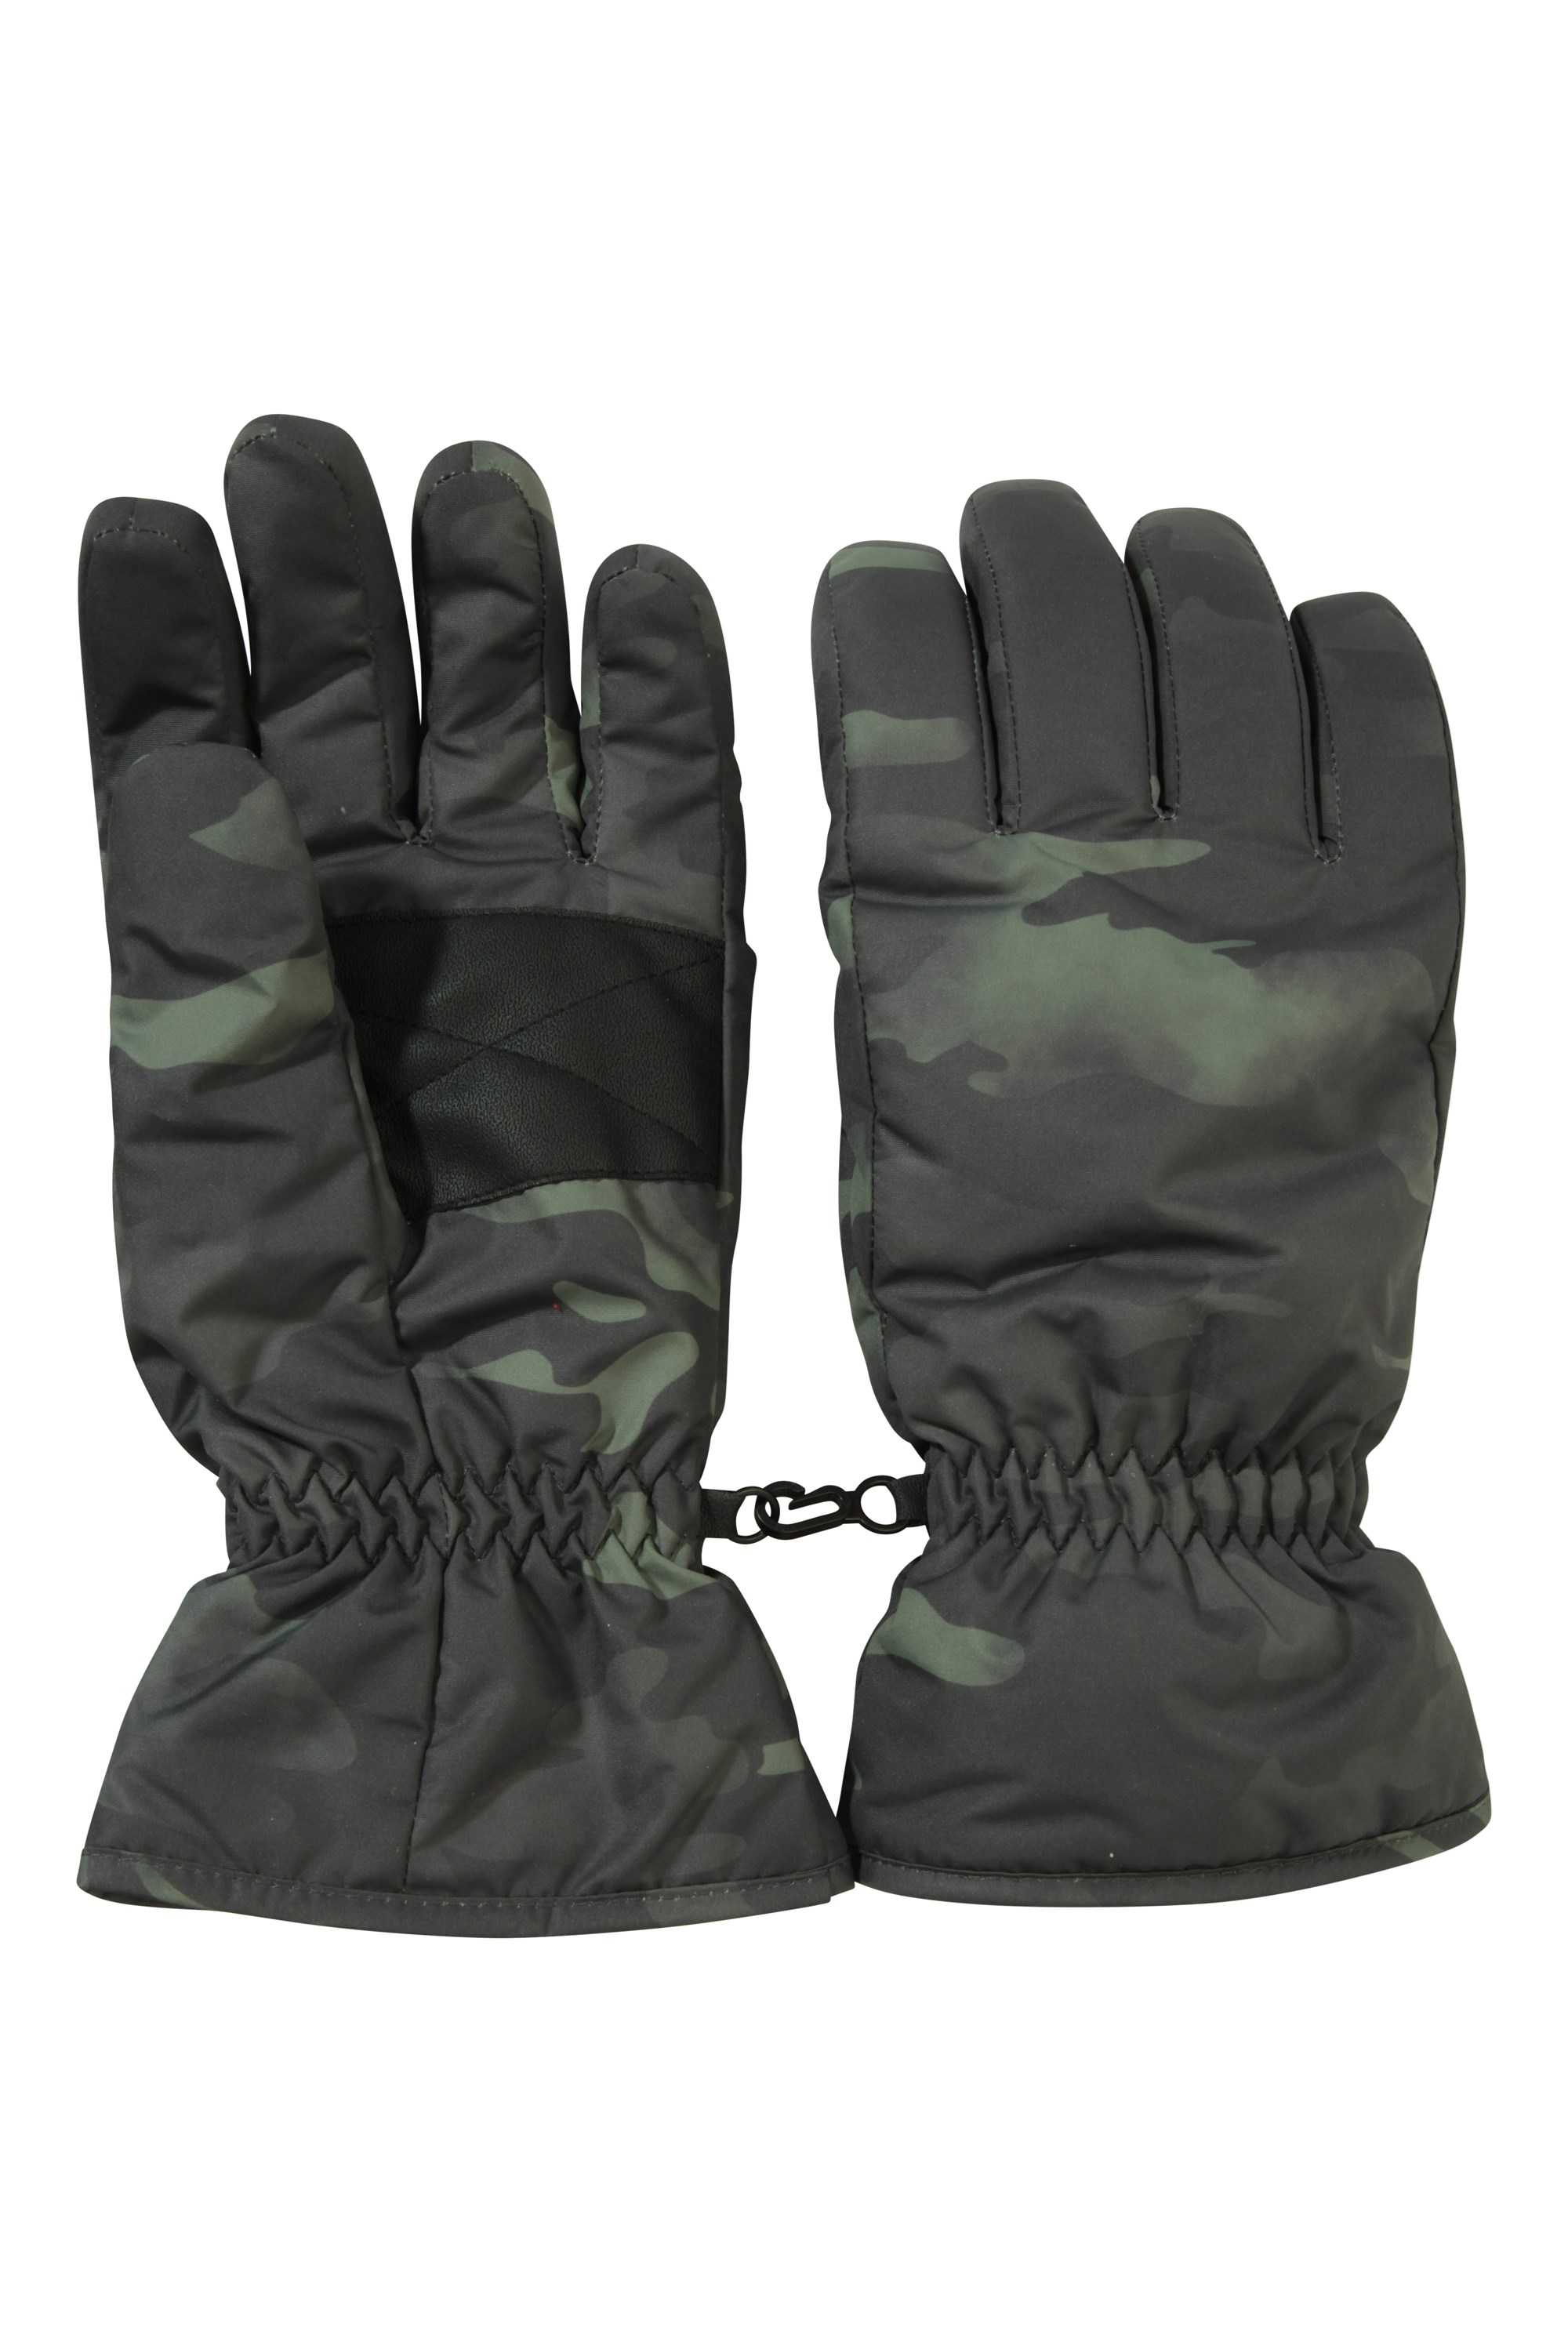 Marca: Mountain WarehouseMountain Warehouse Womens Ski Gloves Textured Palm for Winter Snowboarding Fleece Lined Warm Glove Snowproof 